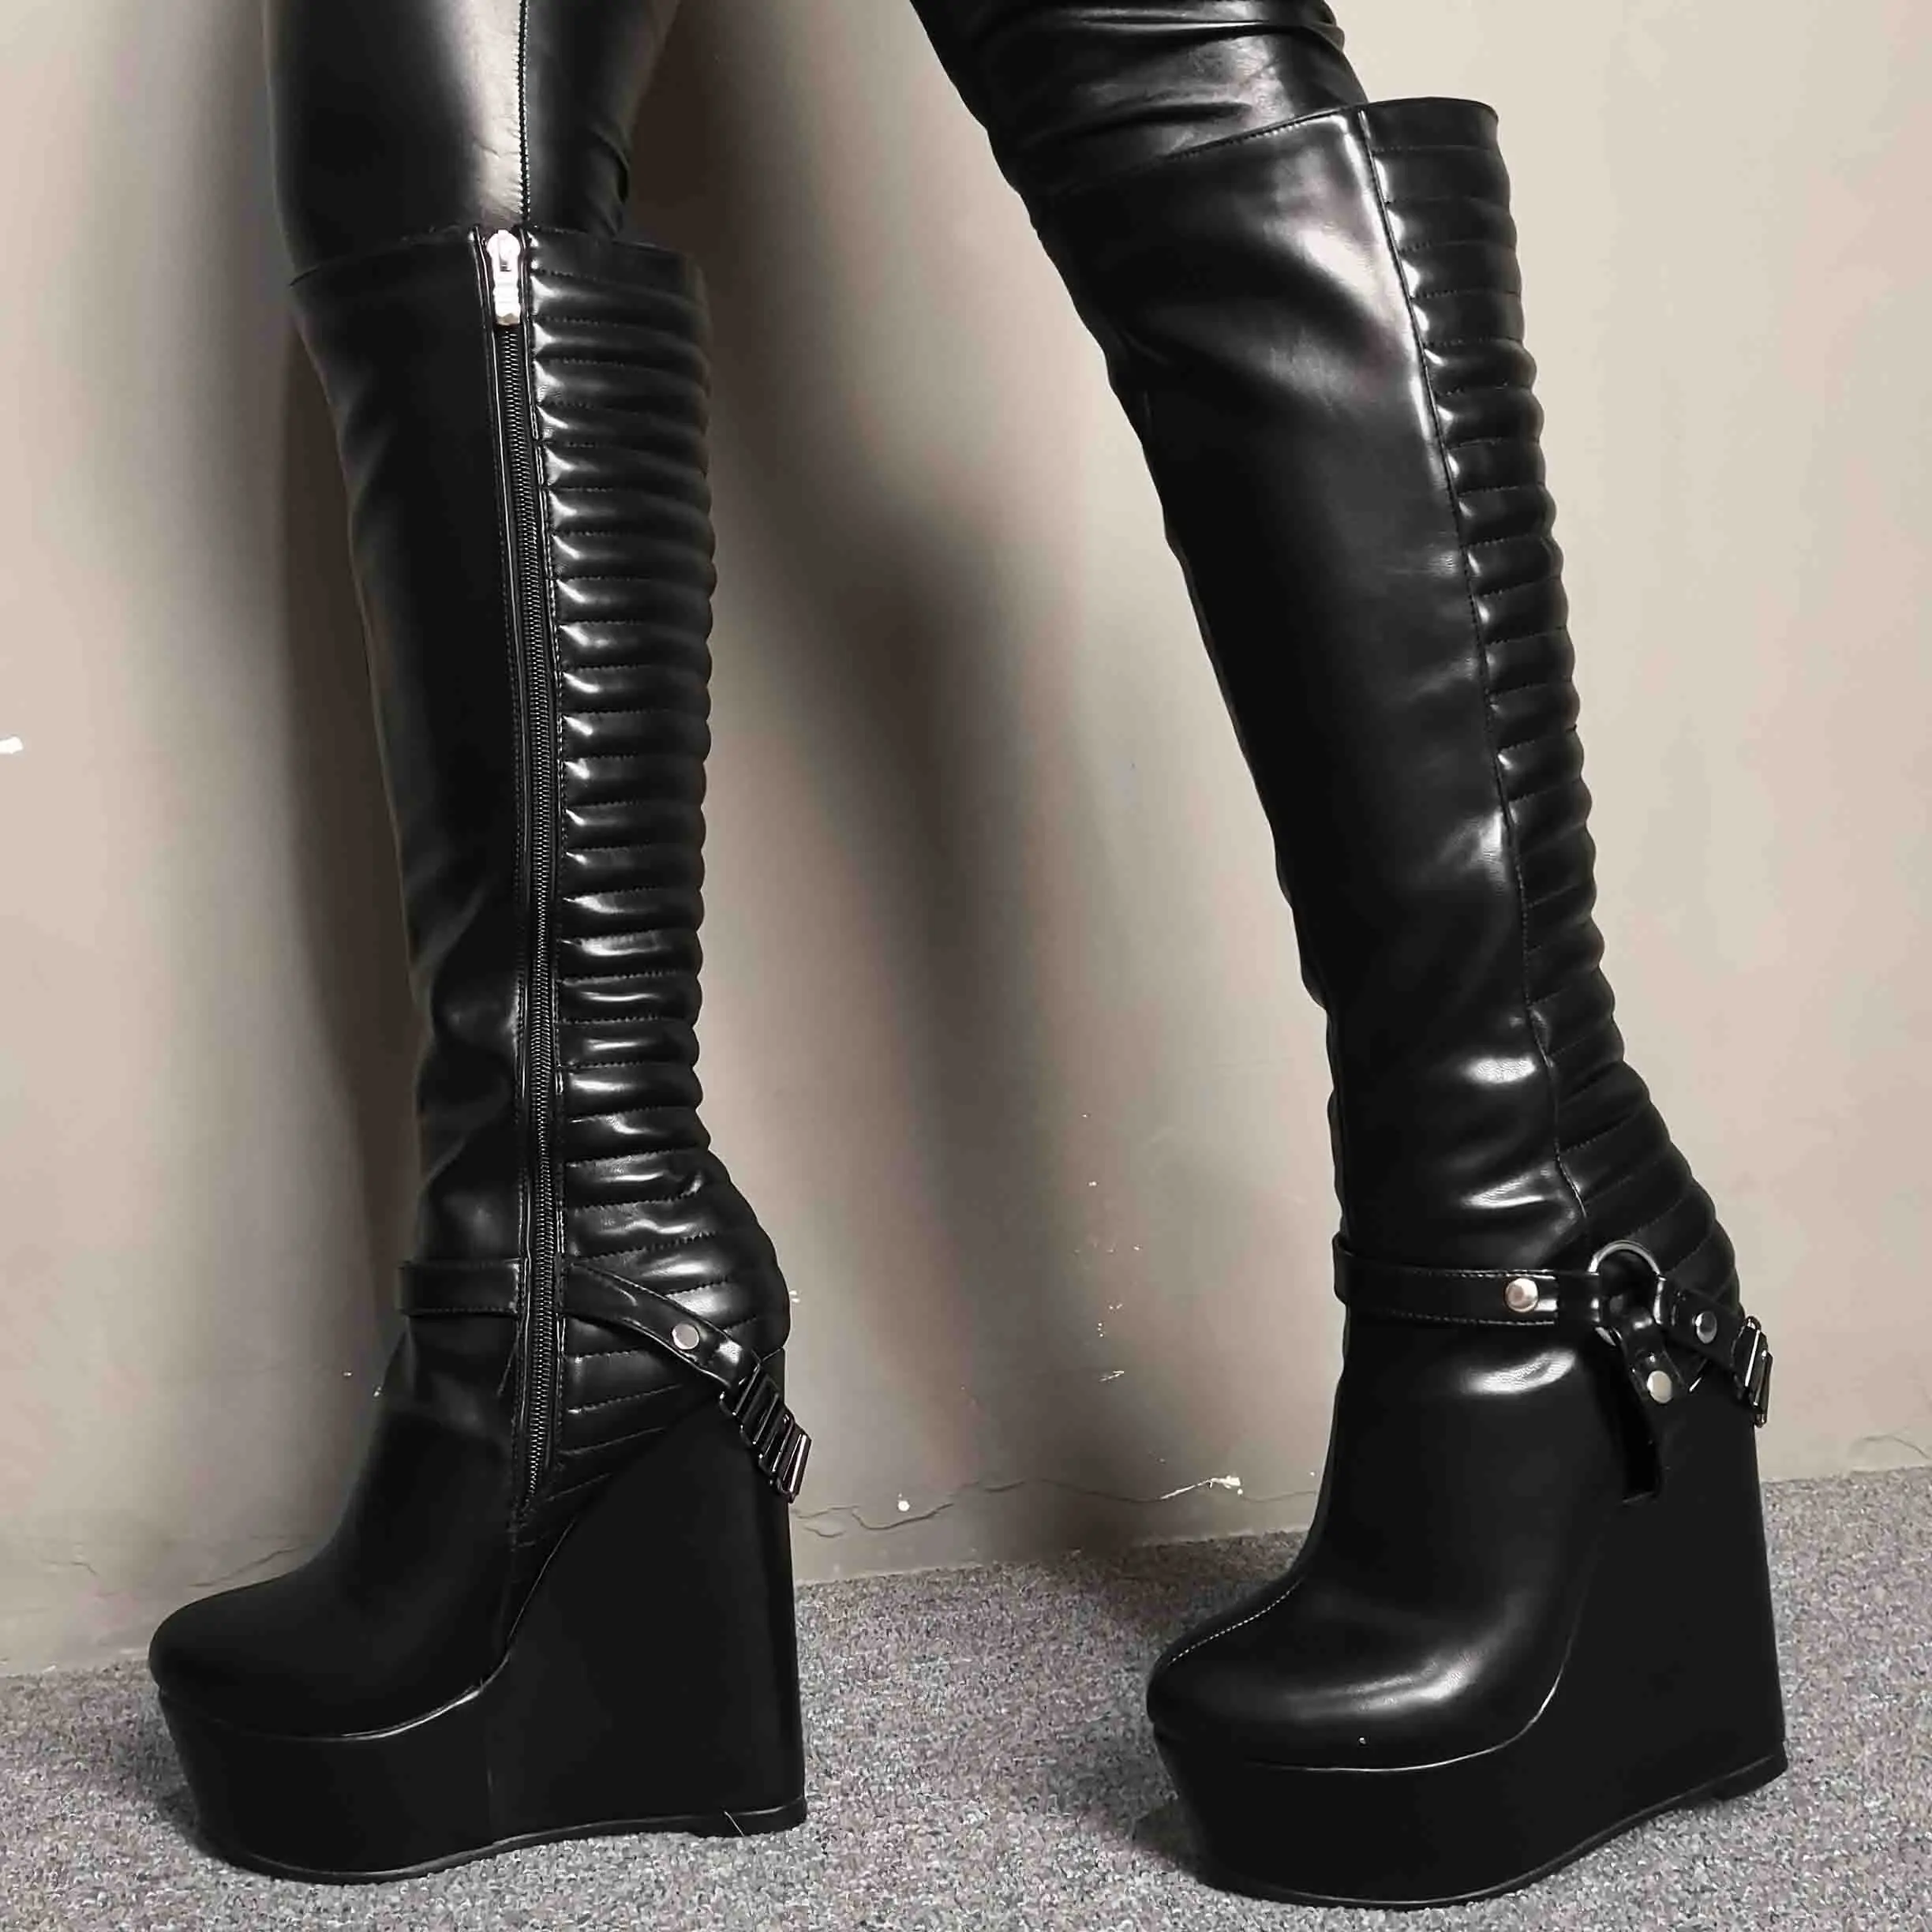 Original Intention Stylish Women Boots Platform wedge High Heels Boots Round Toe Elegant Black Zip Shoes Women Size 4-15 - Цвет: EF7342 Black